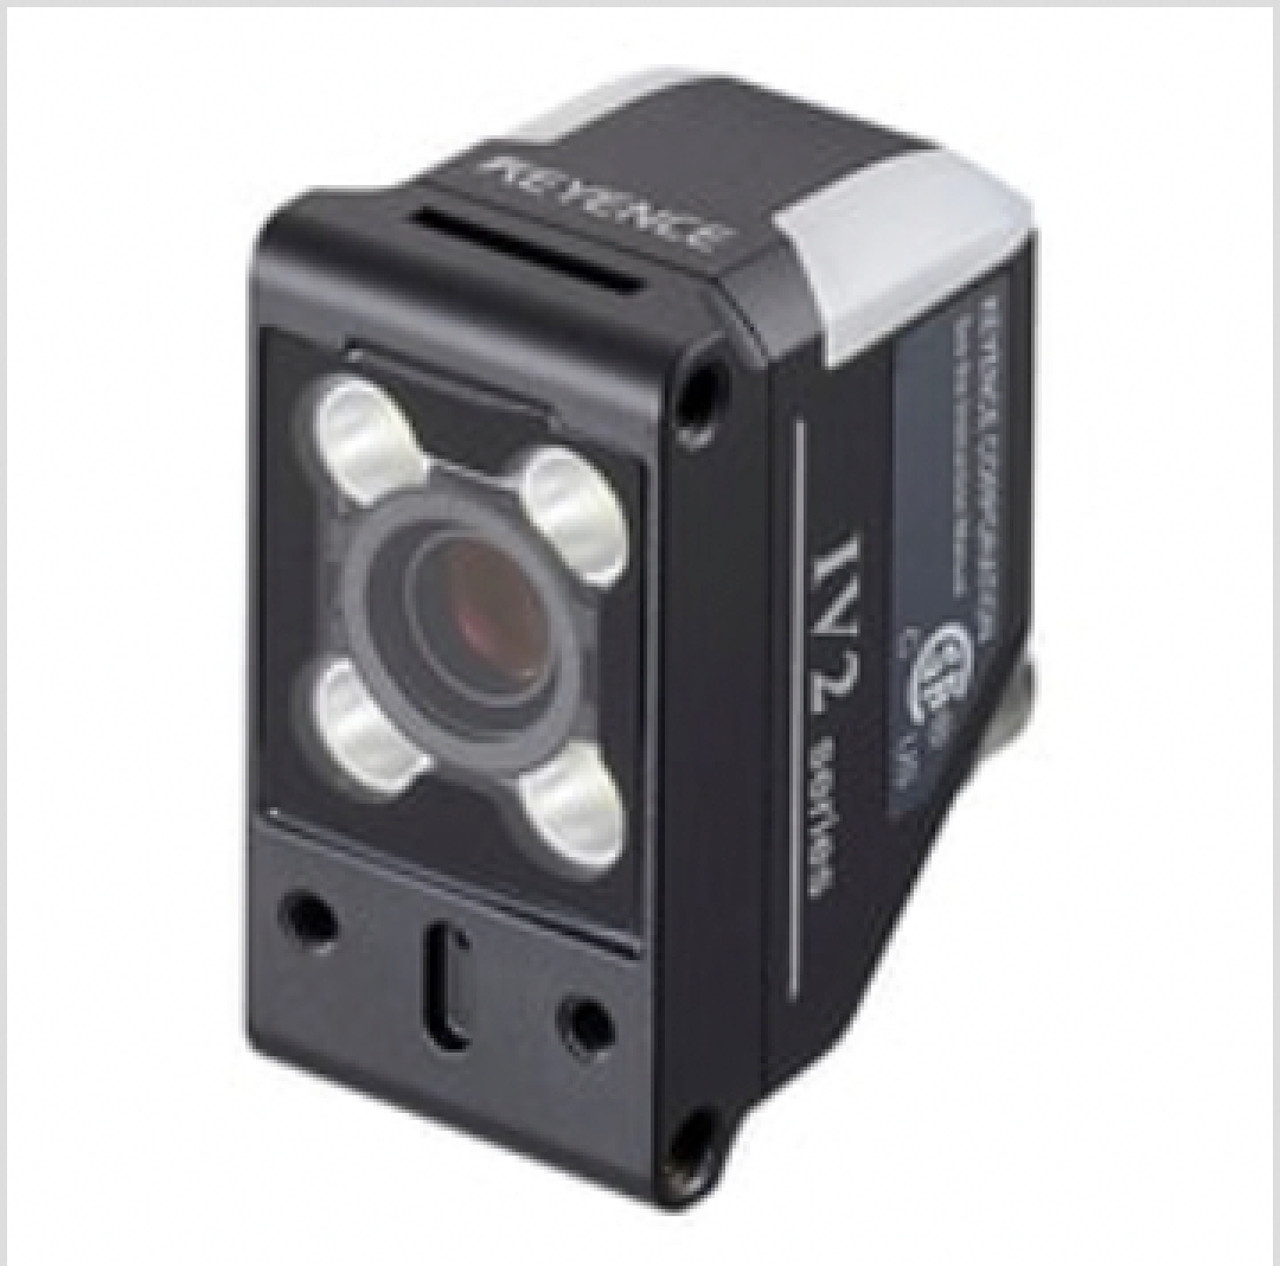 Keyence IV-HG600MA Vision Sensor Head, Wide Field of View, Monochrome, AutoFocus [New]